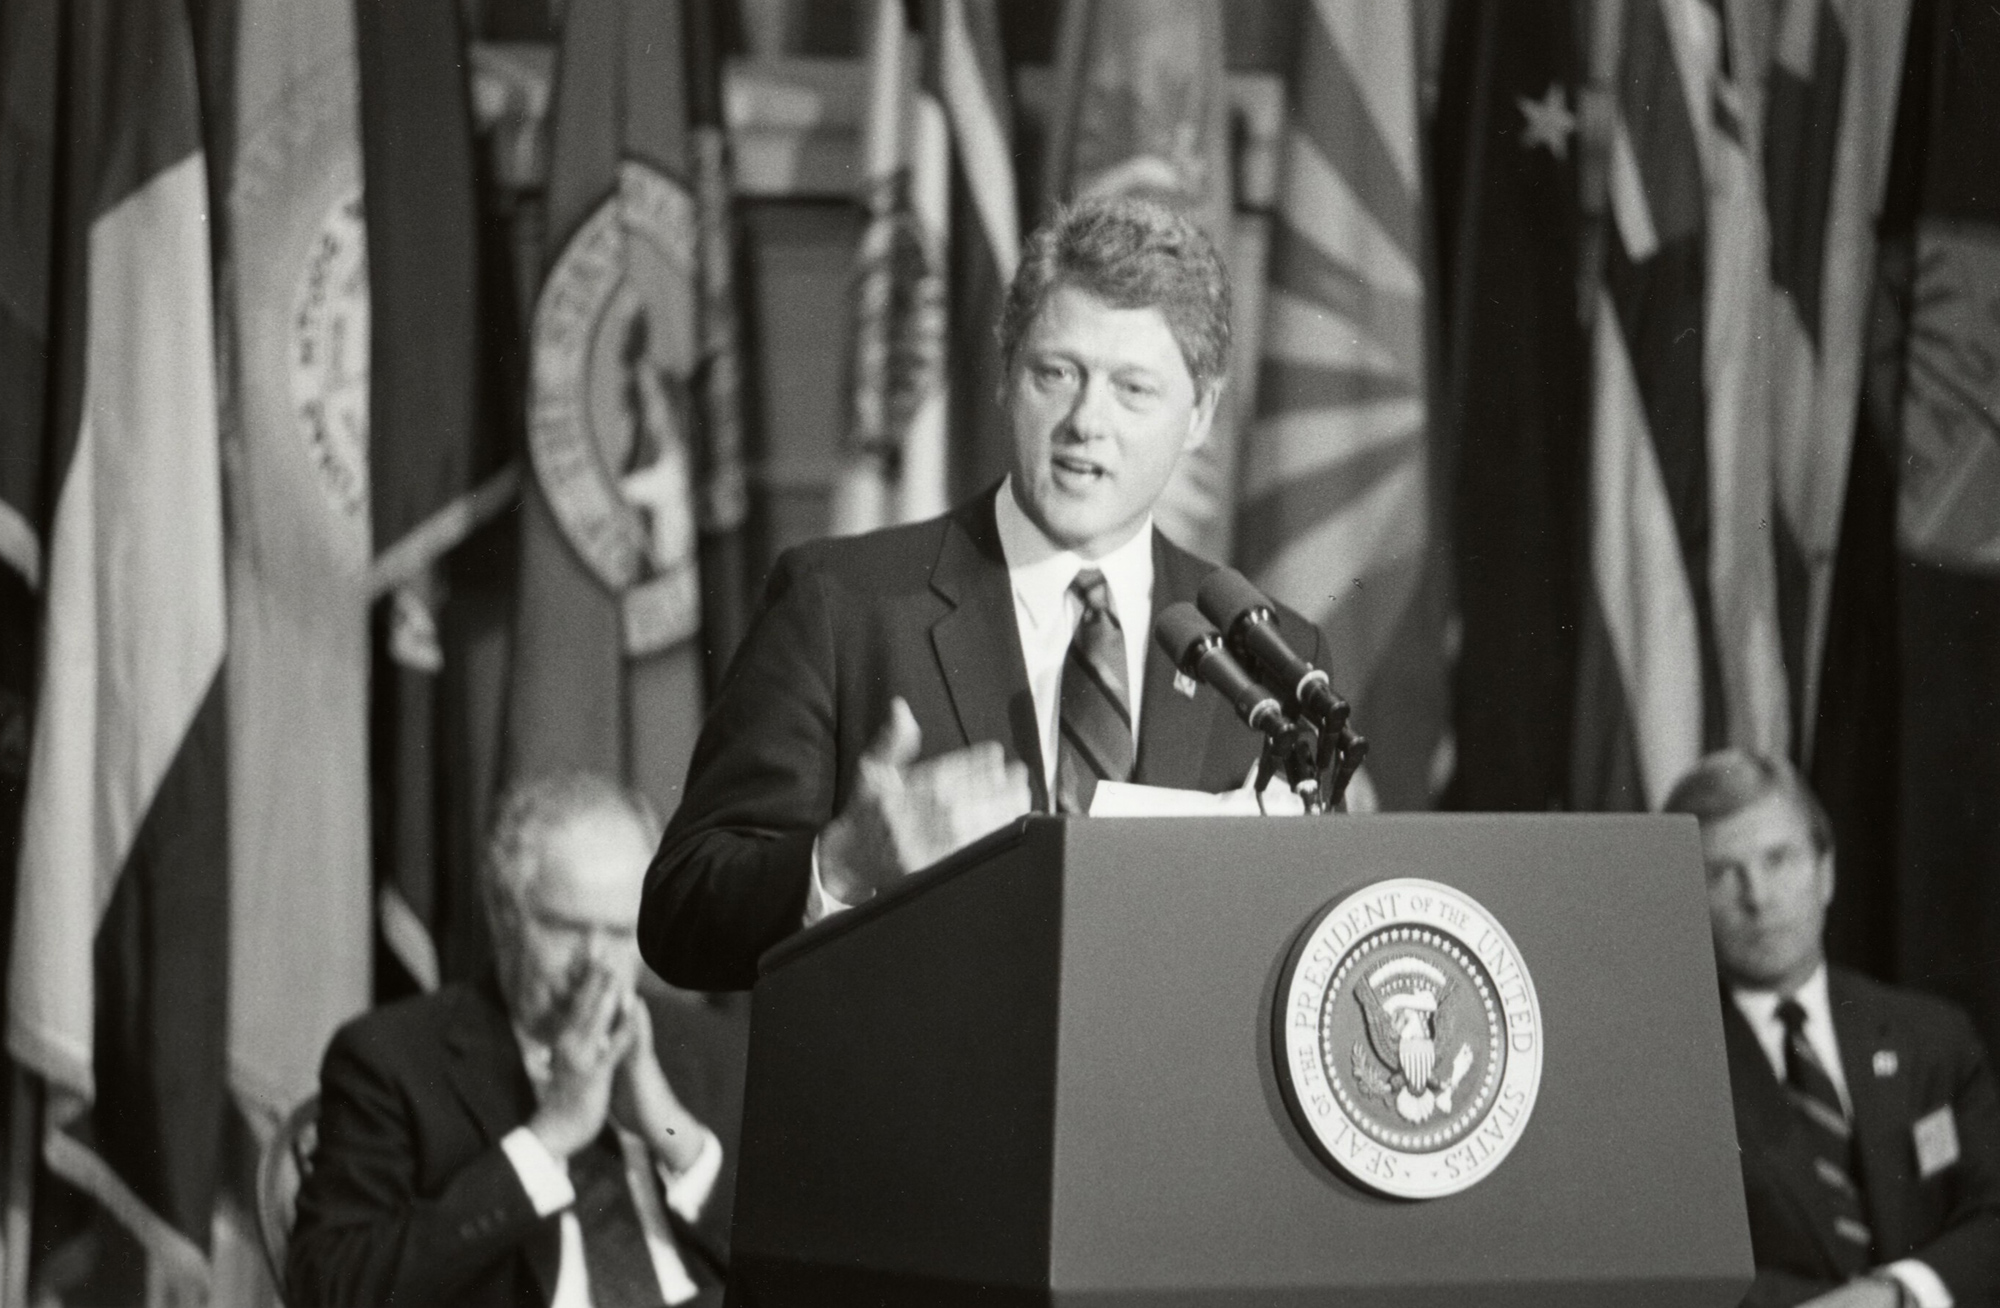 President Clinton talking at a podium